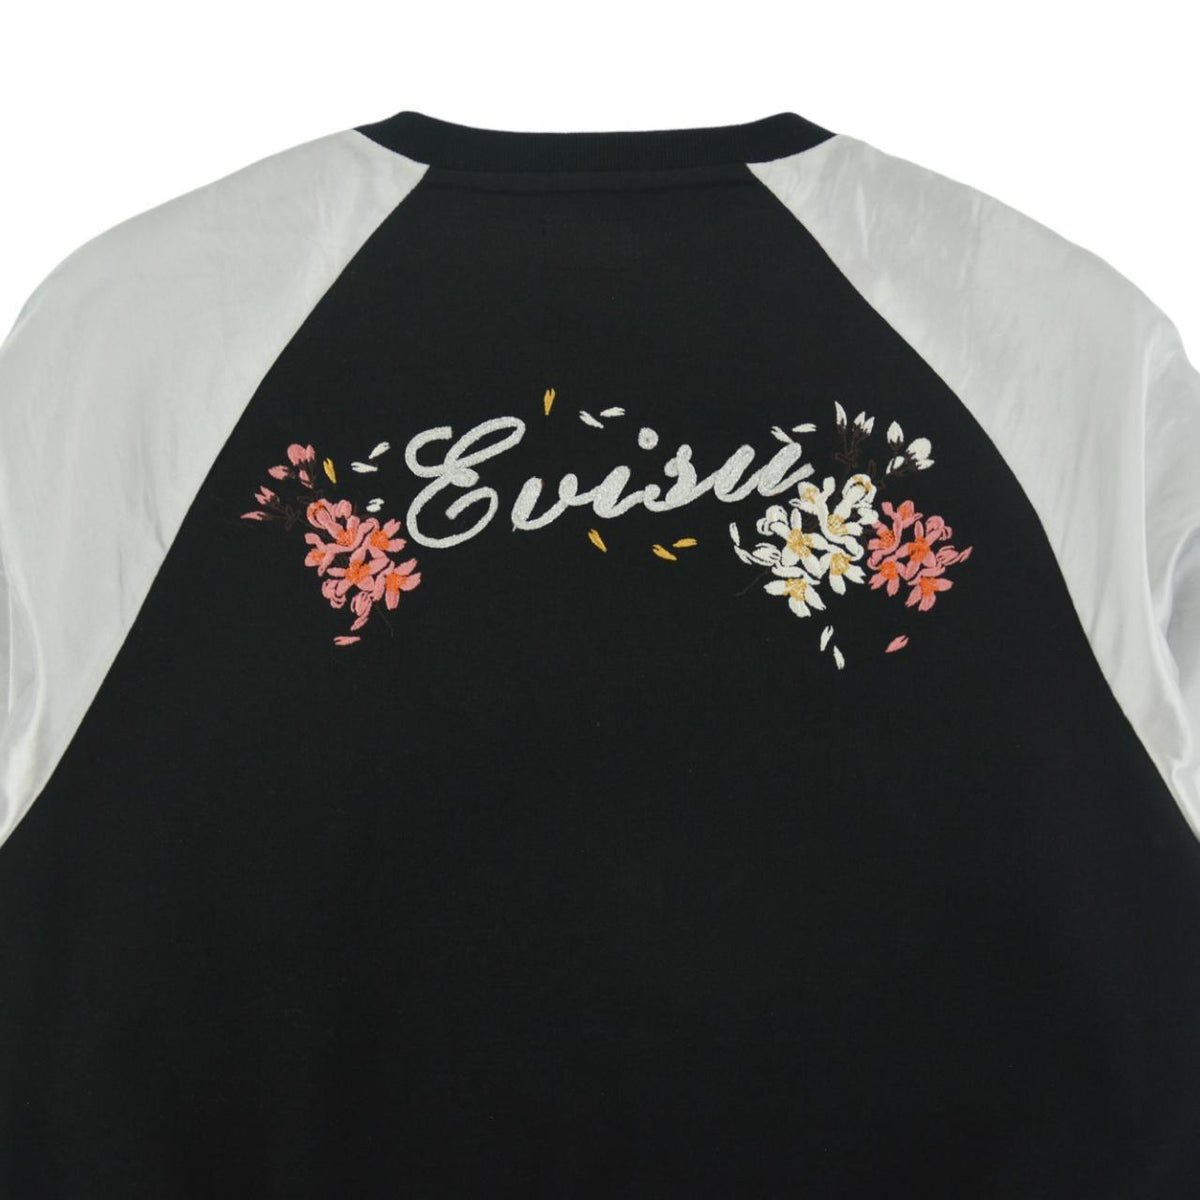 Vintage Evisu Sweatshirt Woman’s Size XS